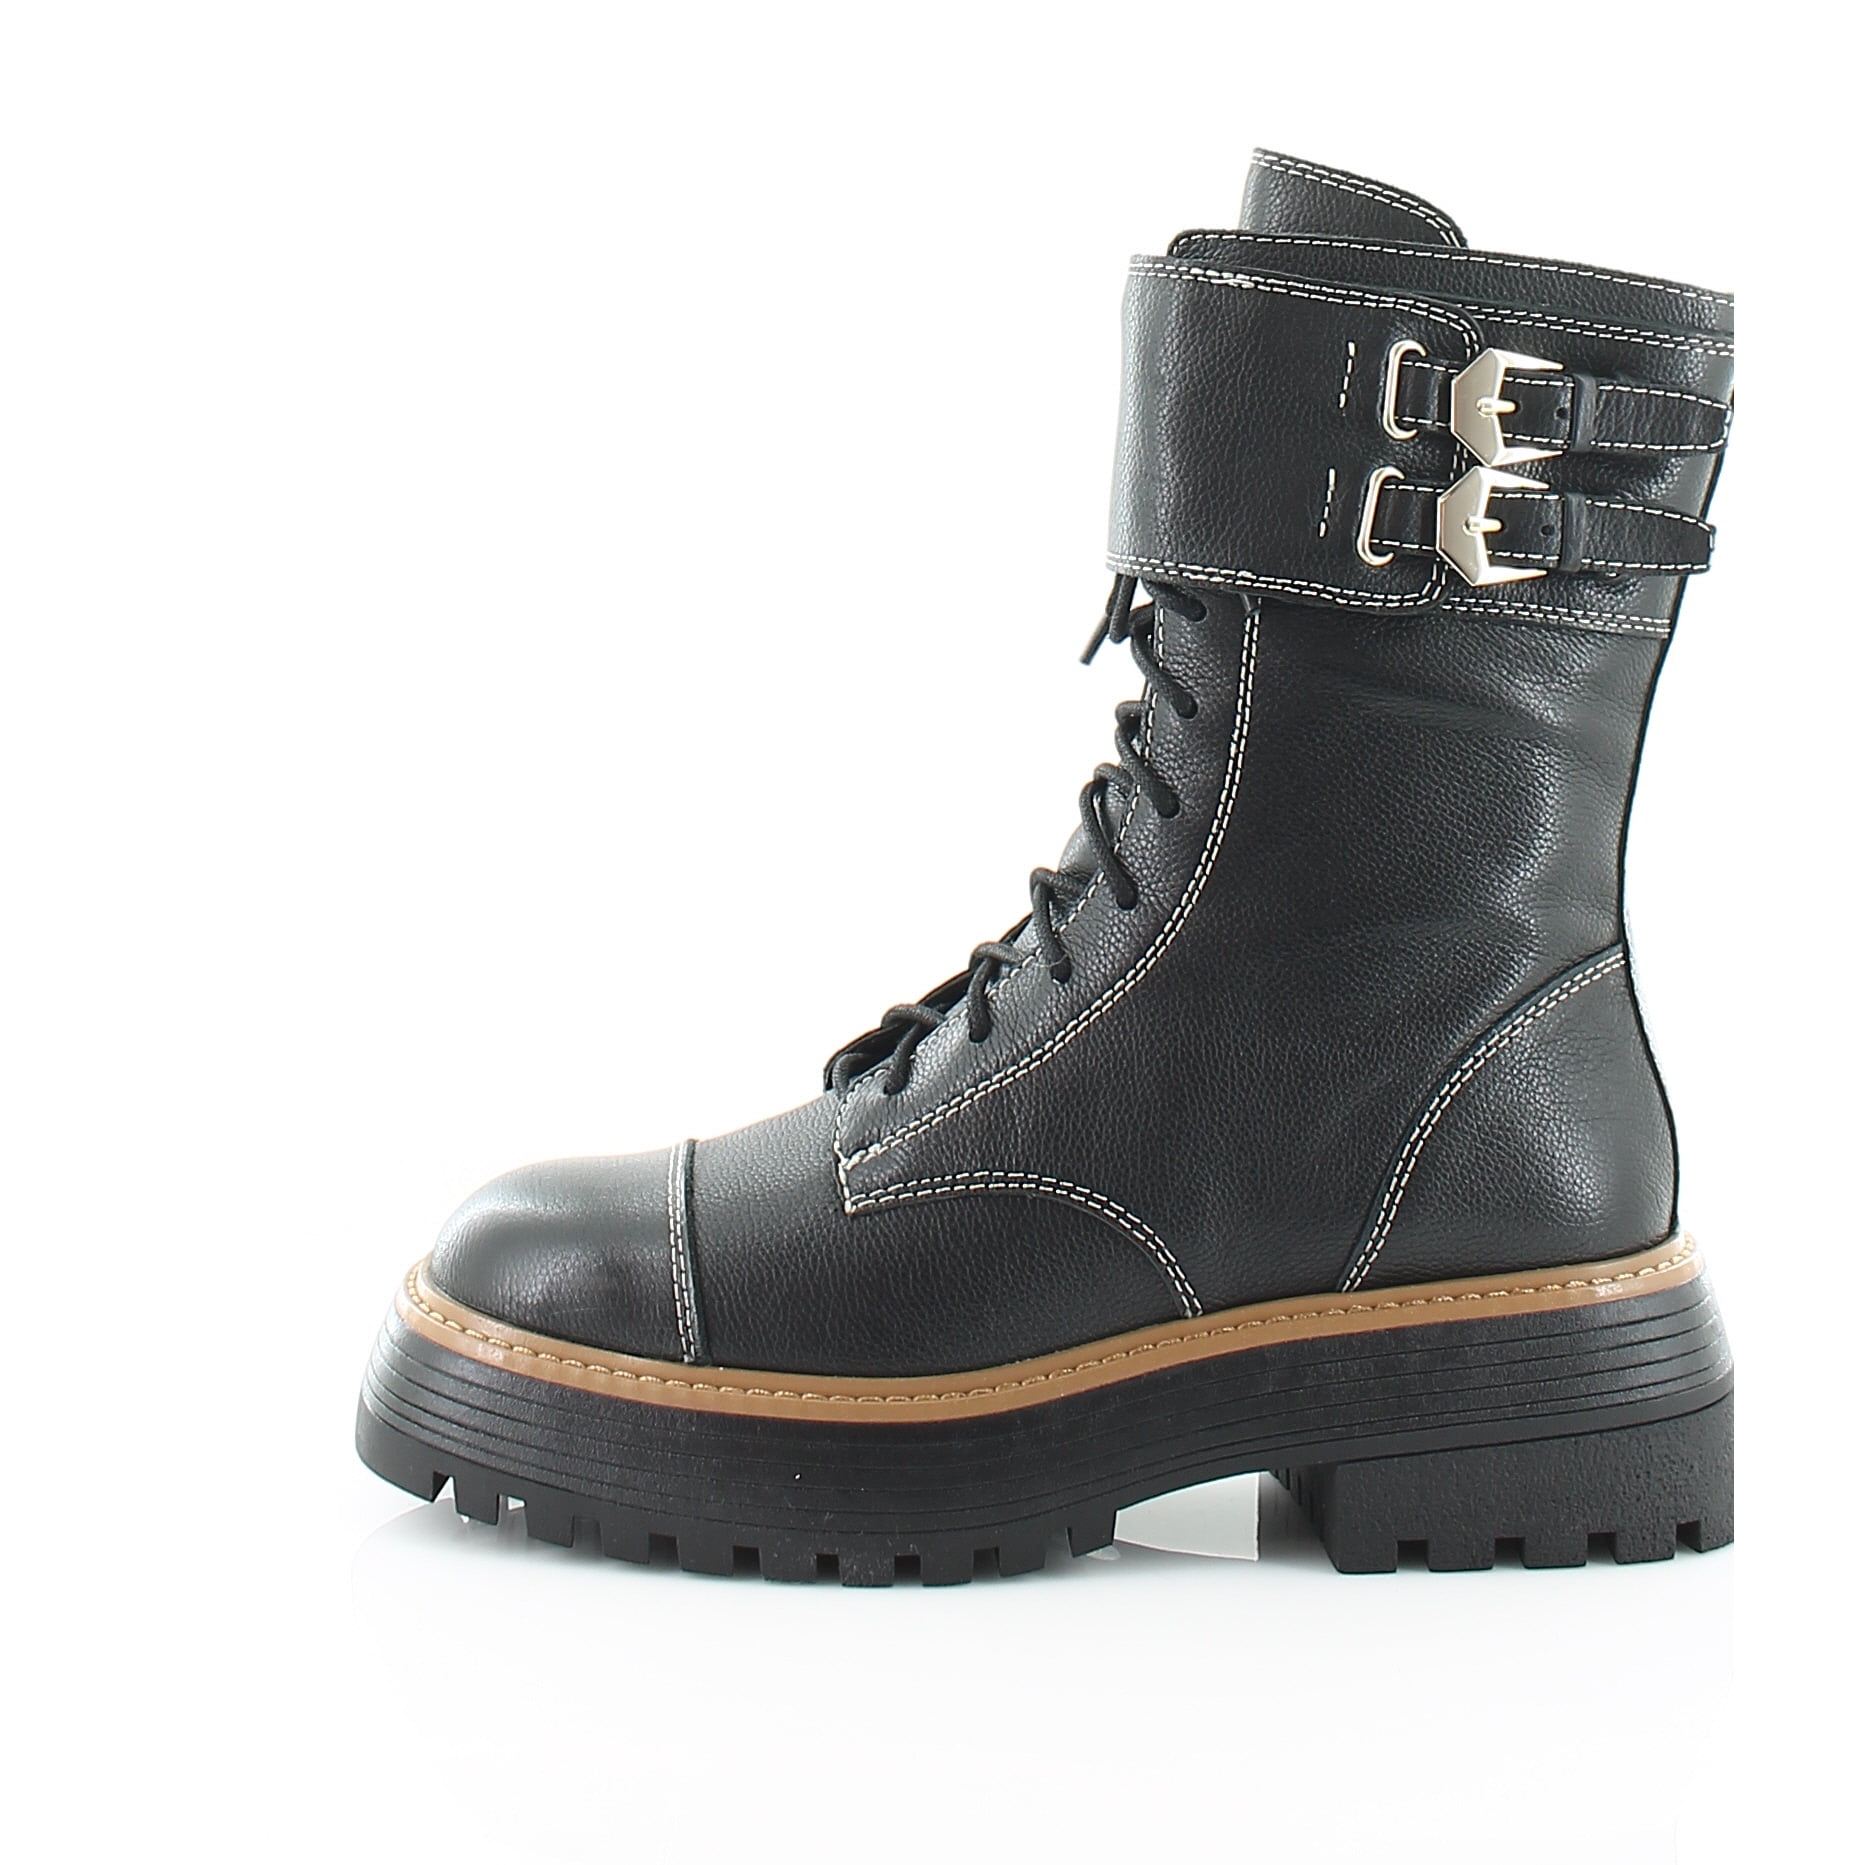 Vince Camuto Monchia Women's Boots Black Size 6 M - Walmart.com